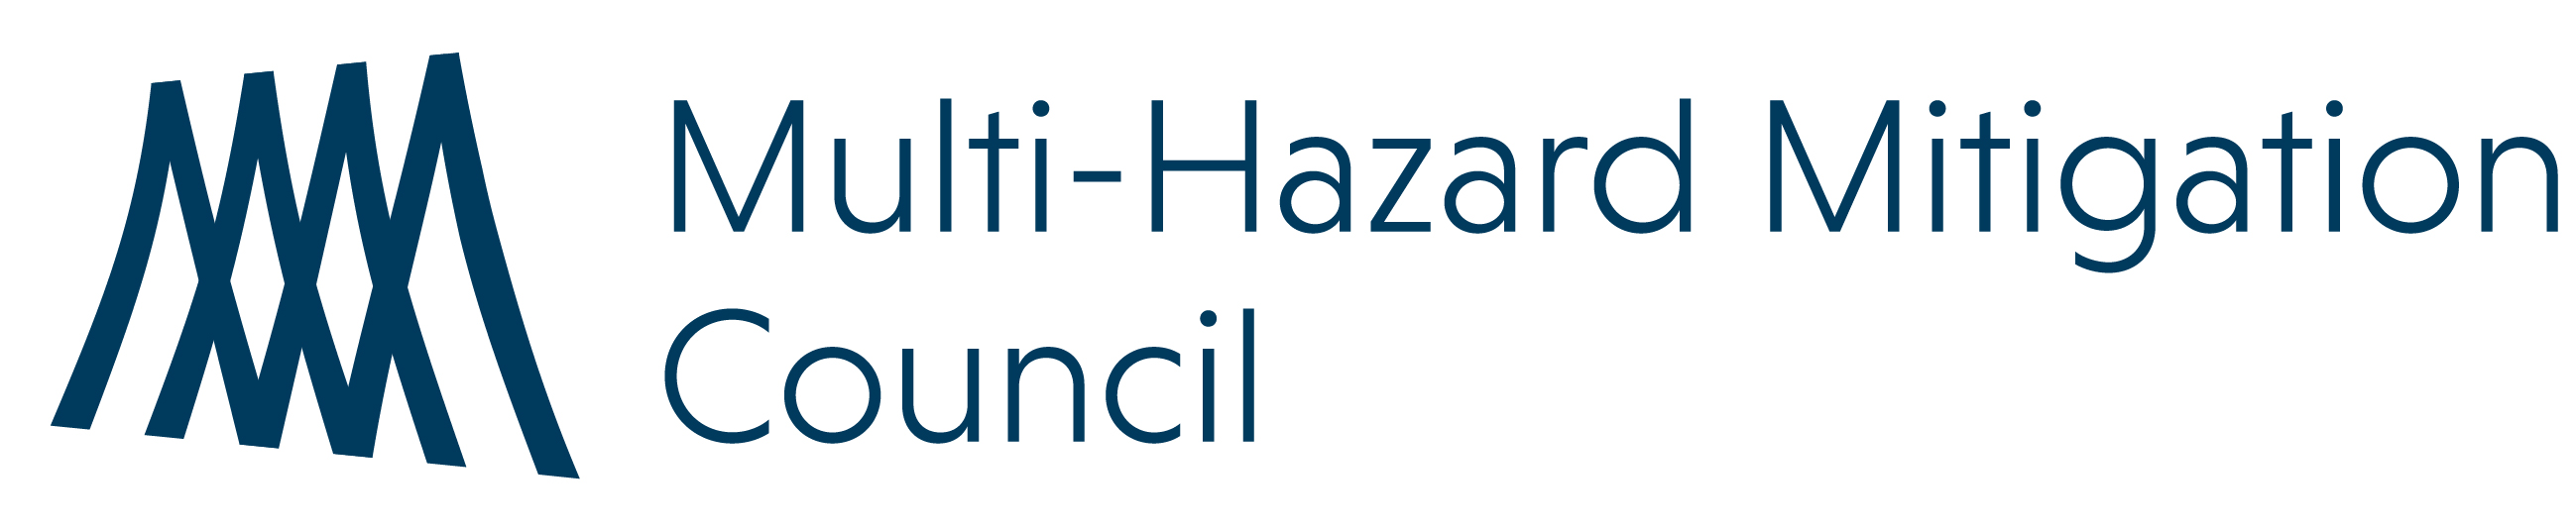 Multi-Hazard Mitigation Council (MMC)